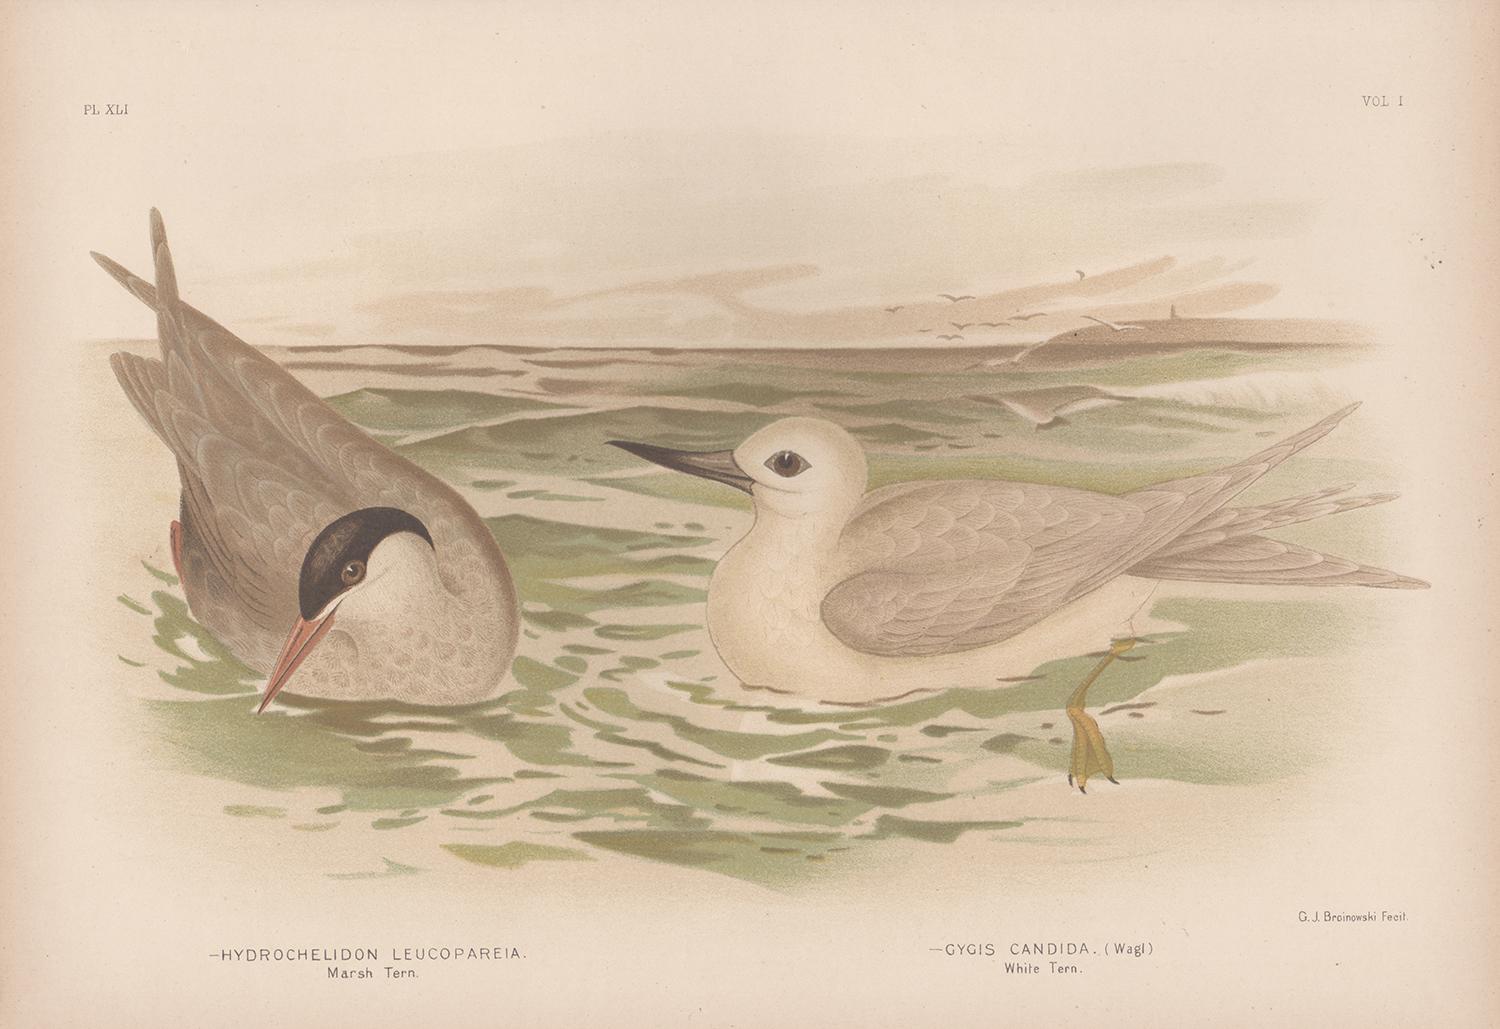 Marsh Tern and White Tern, antique sea bird chromolithograph print, 1889